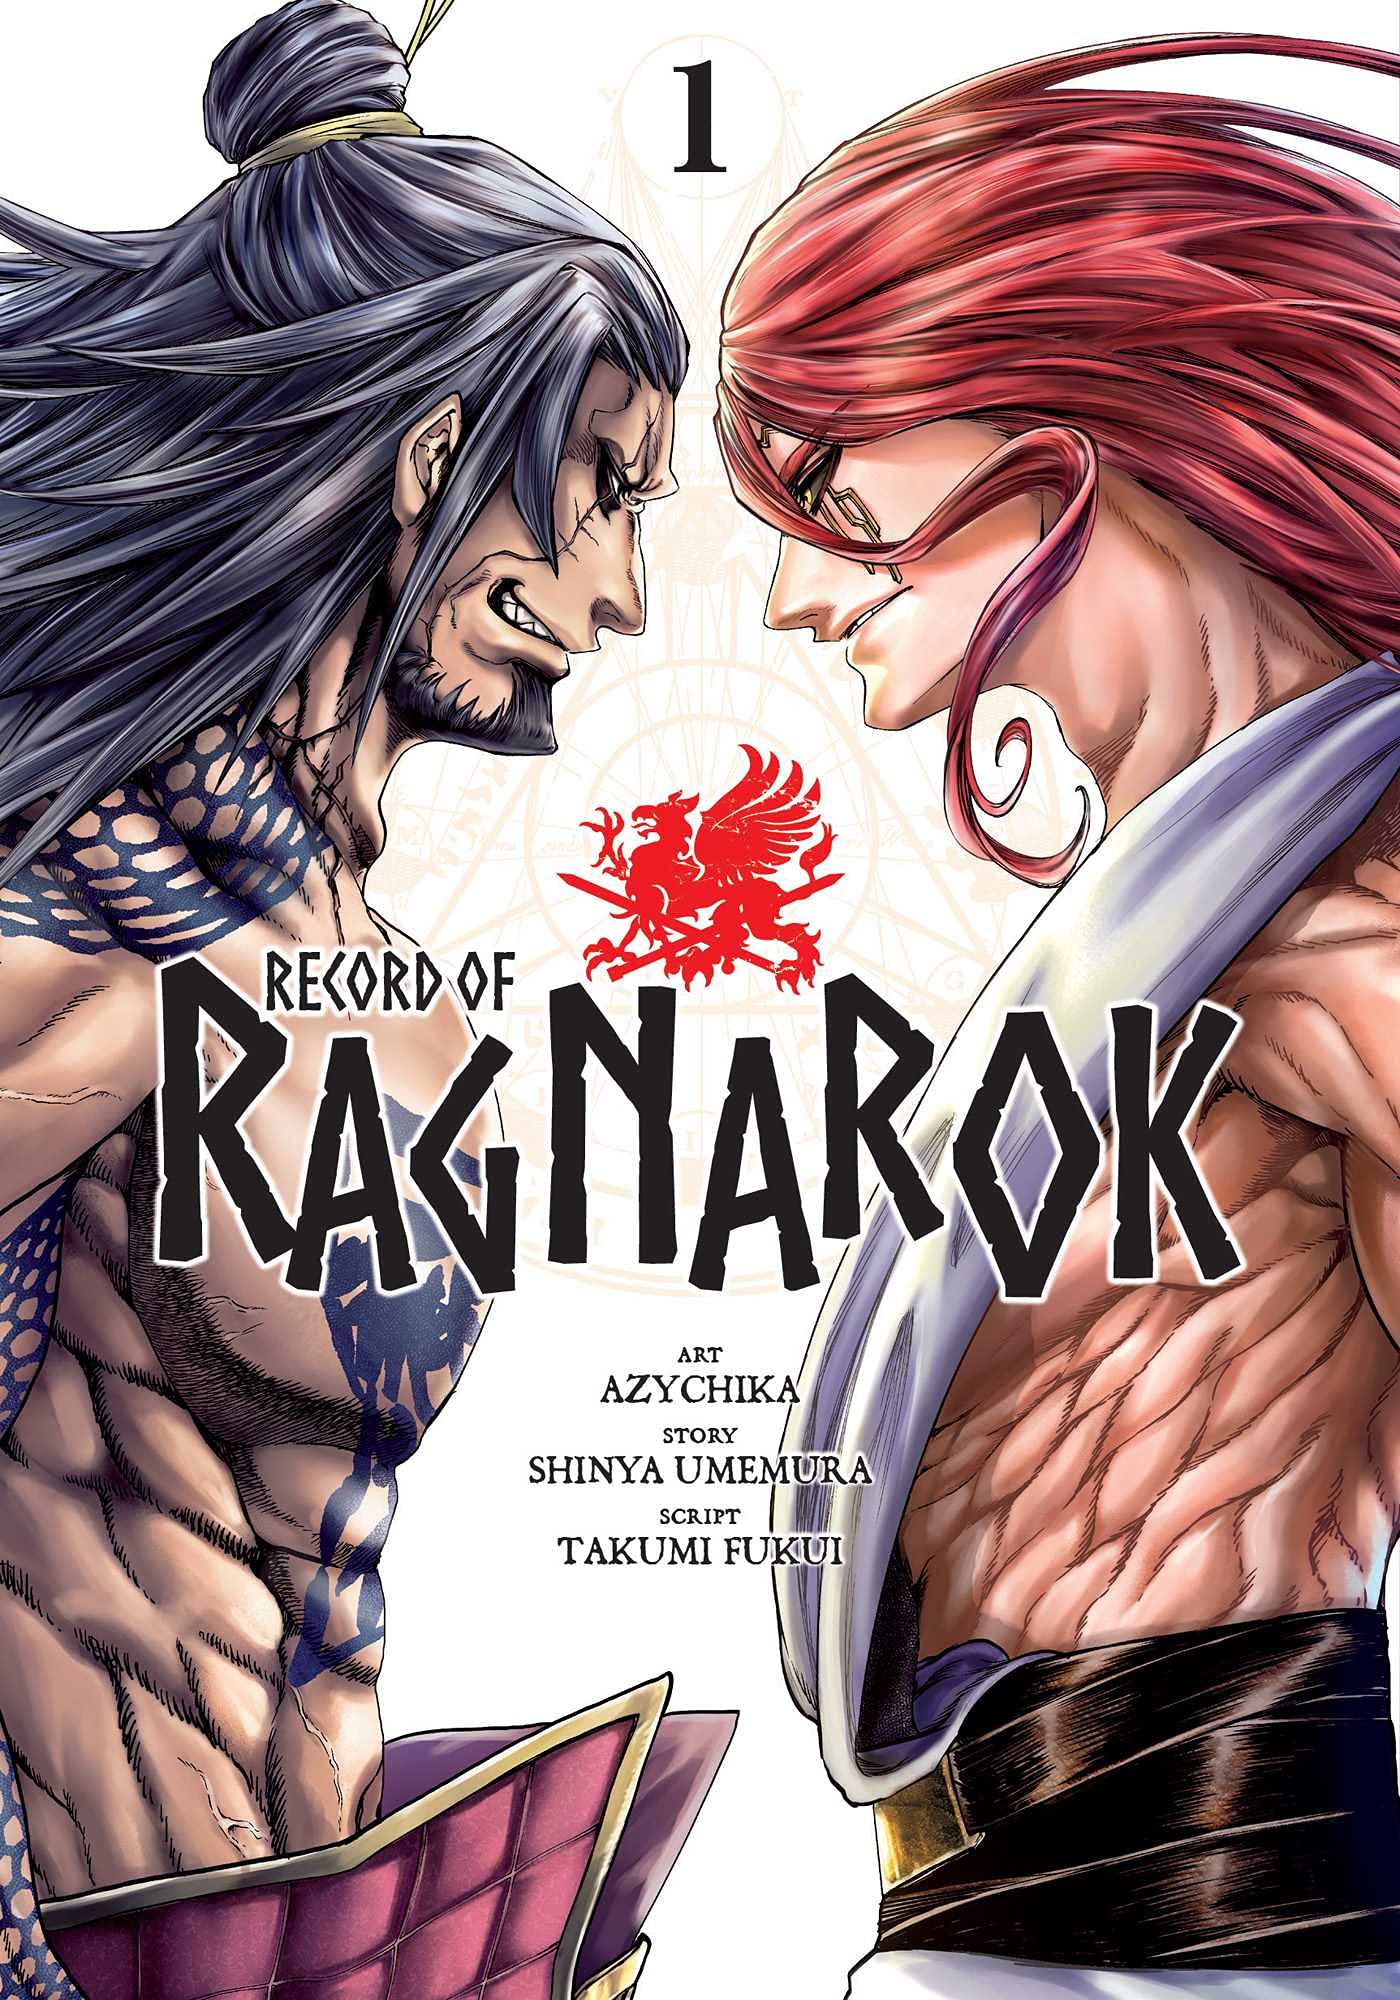 Record of Ragnarok' Manga Getting TV Anime Adaptation